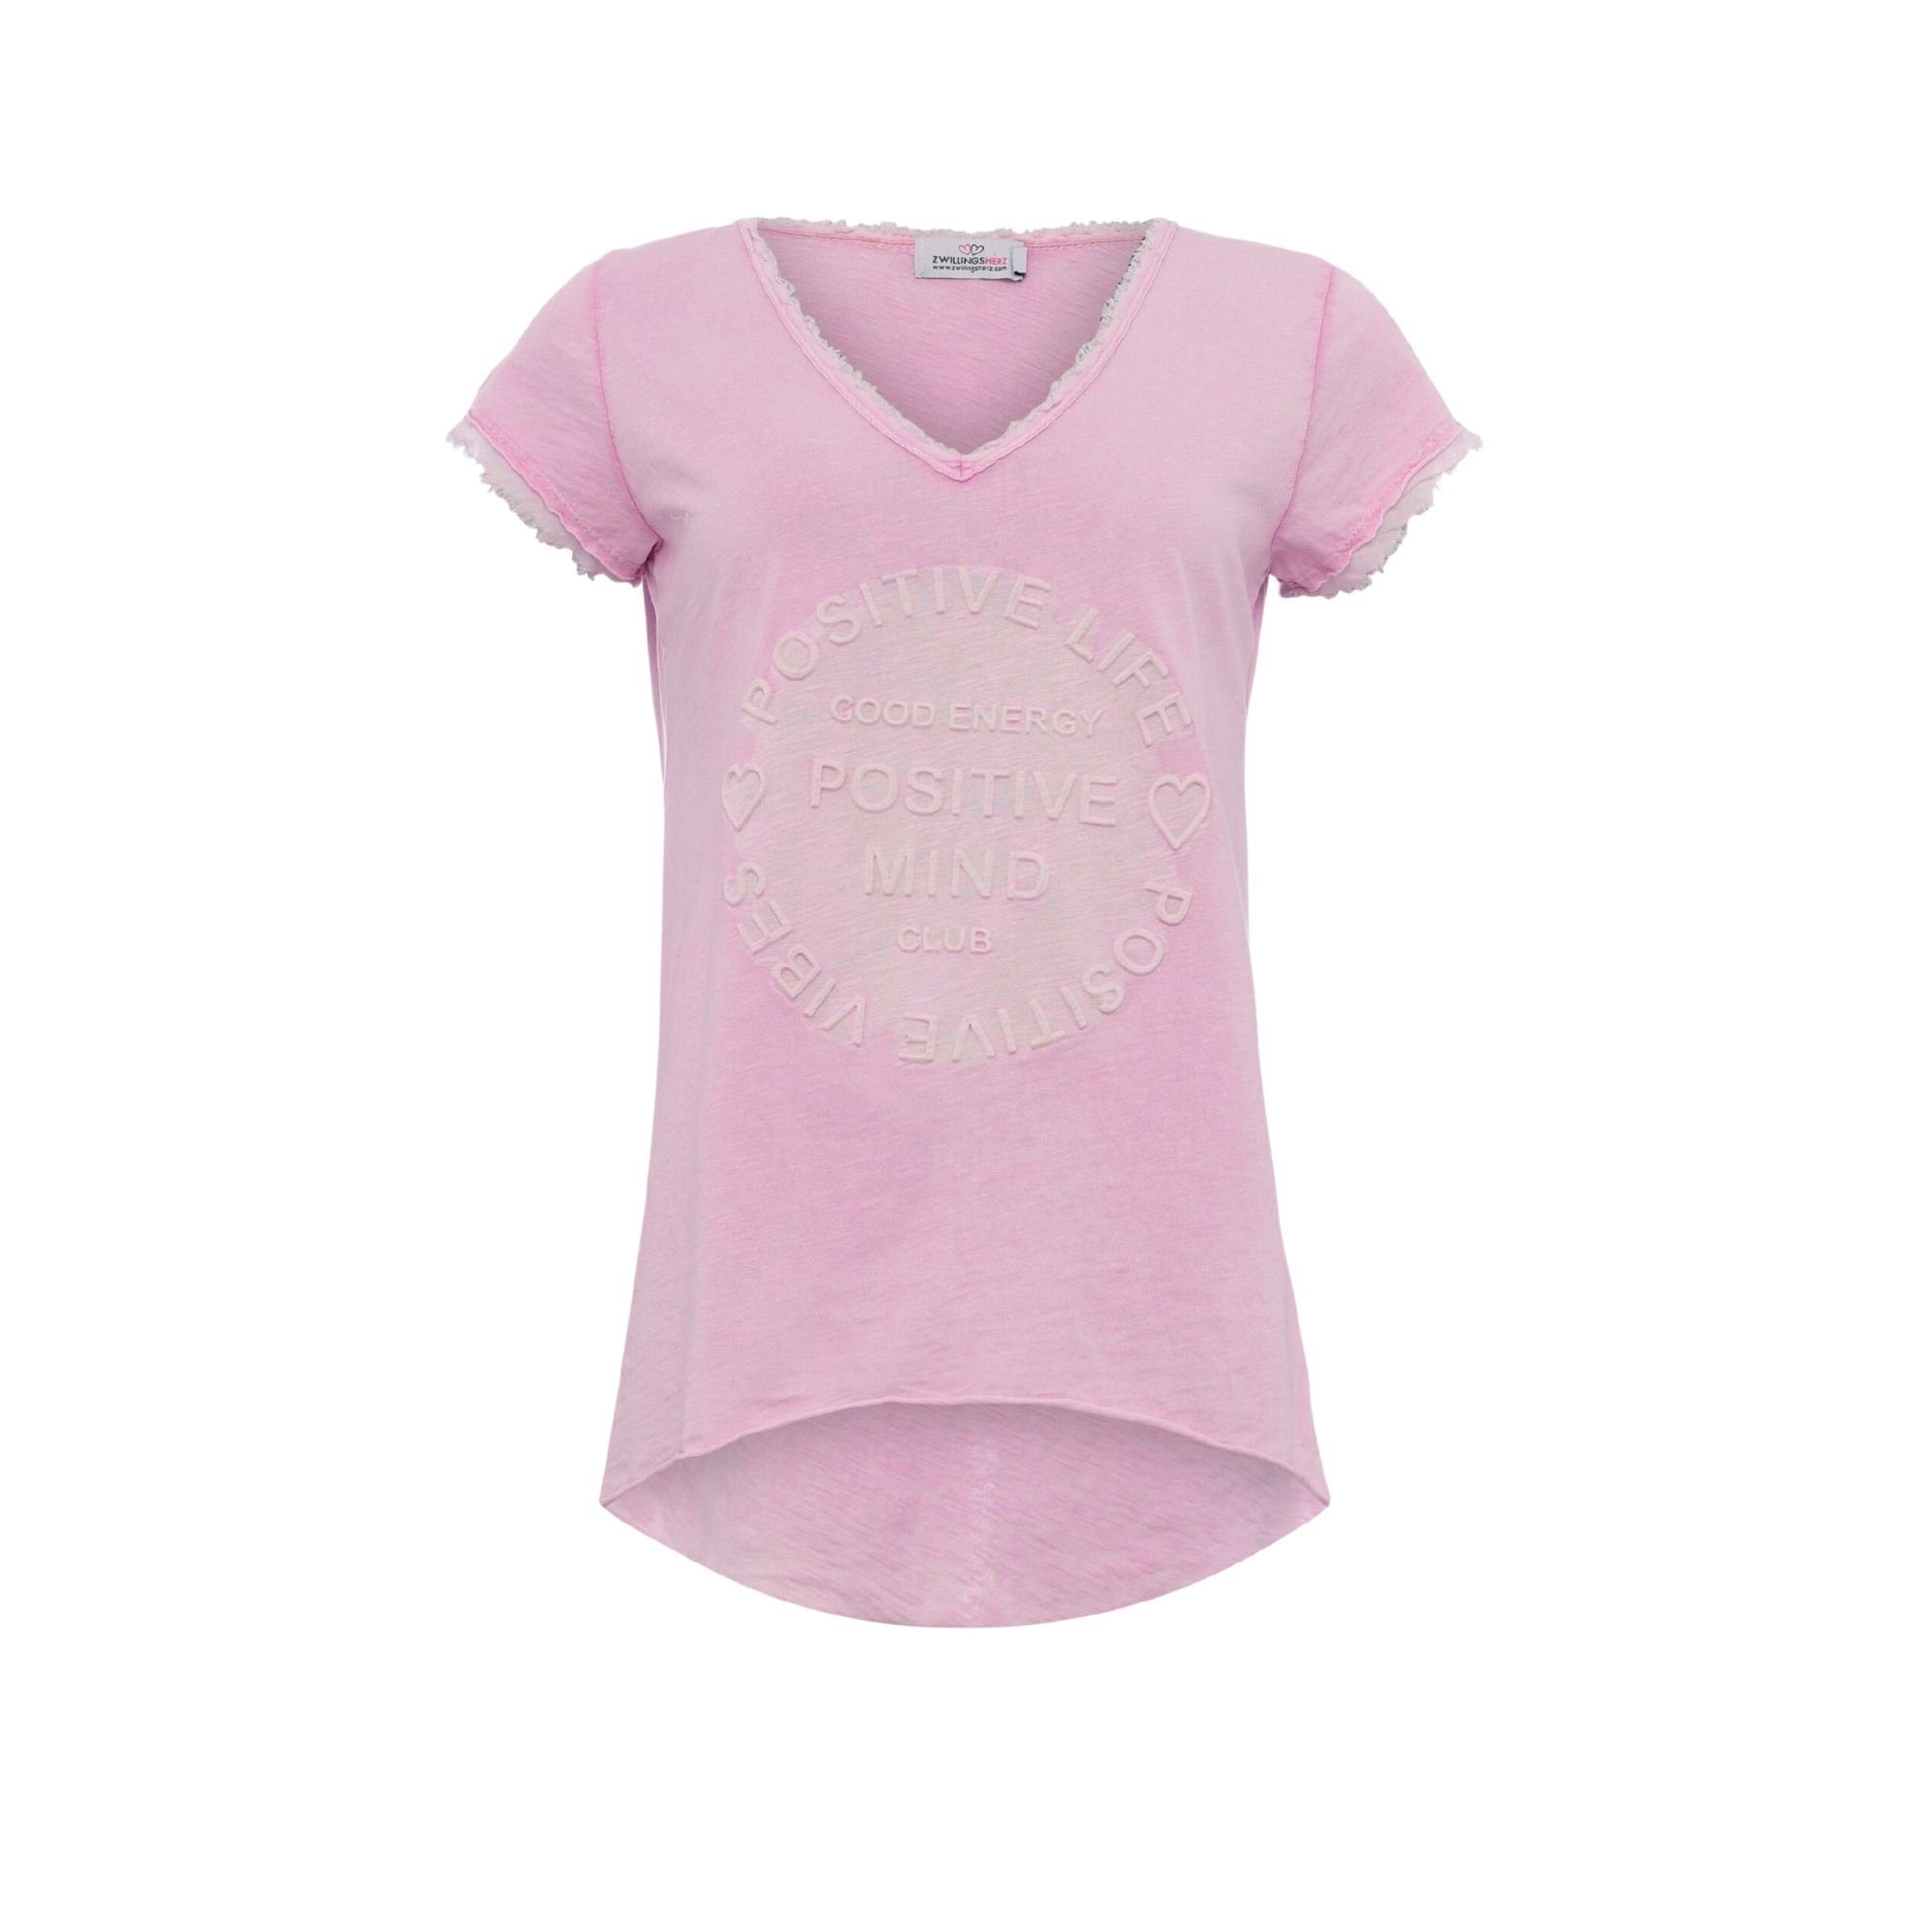 Zwillingsherz T-Shirt Damen T-Shirt Tail in blau, flieder oder rosa  Aufdruck Positive Life